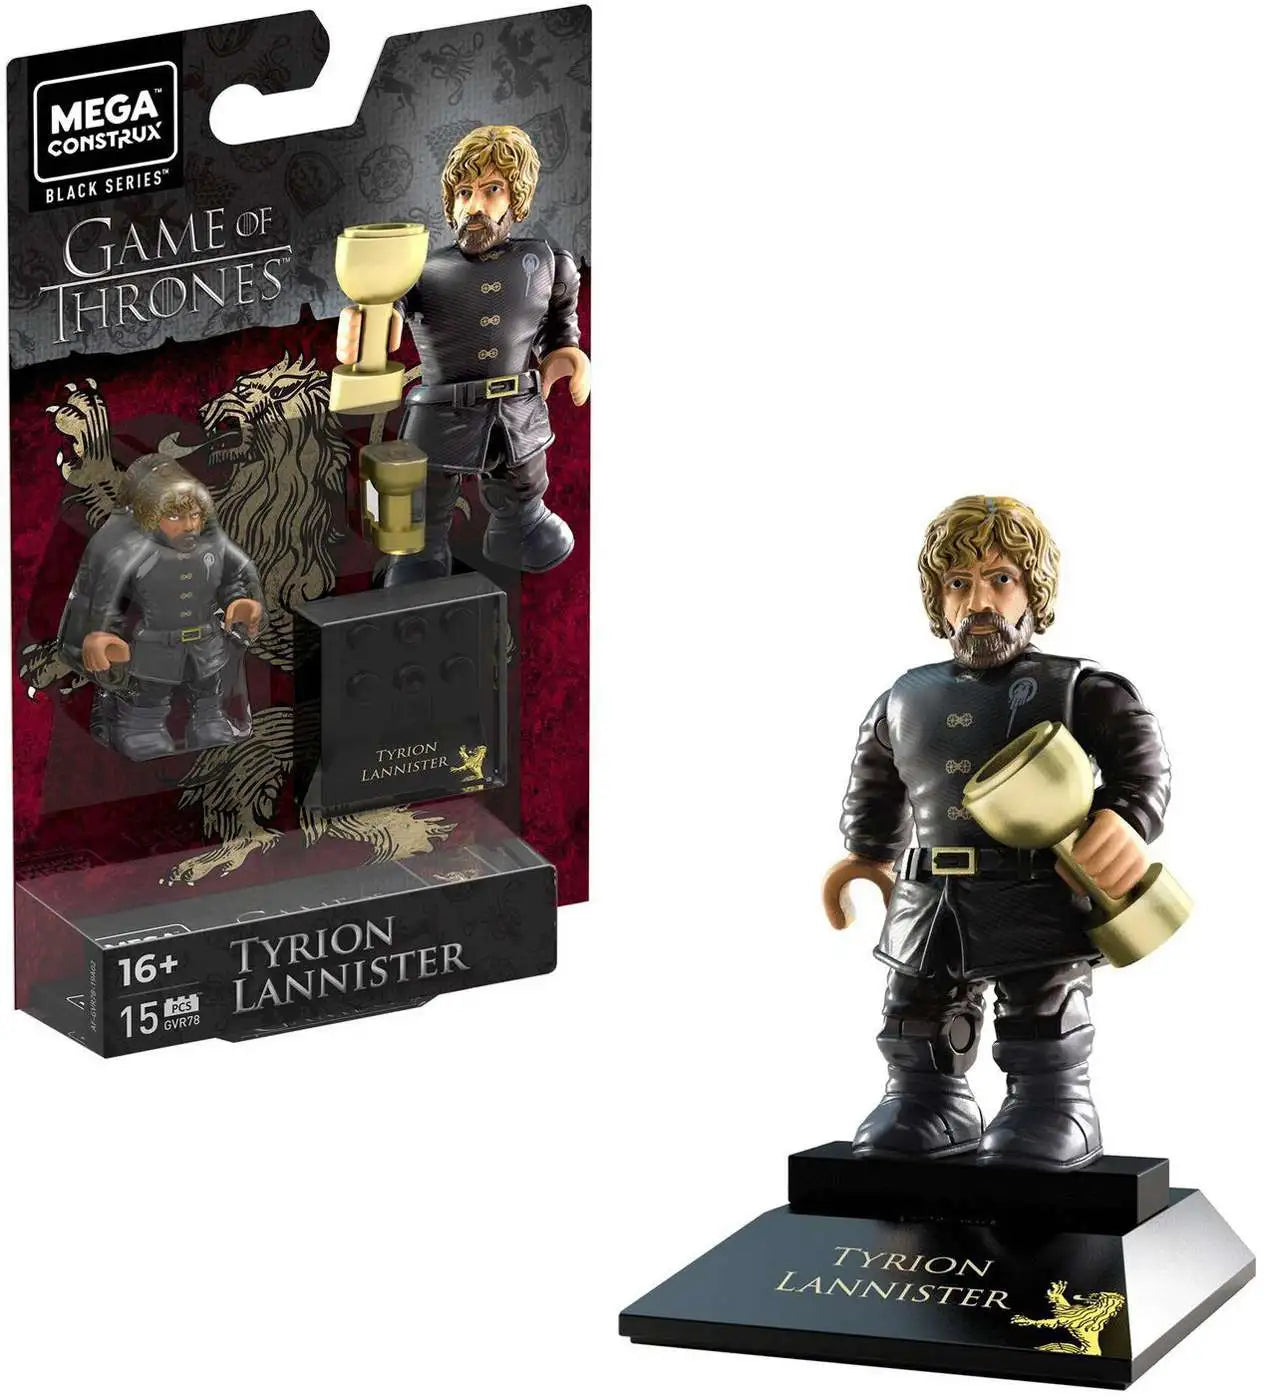 Tyrion Lannister - Mega Construx Game of Thrones Black Series Figure Pack